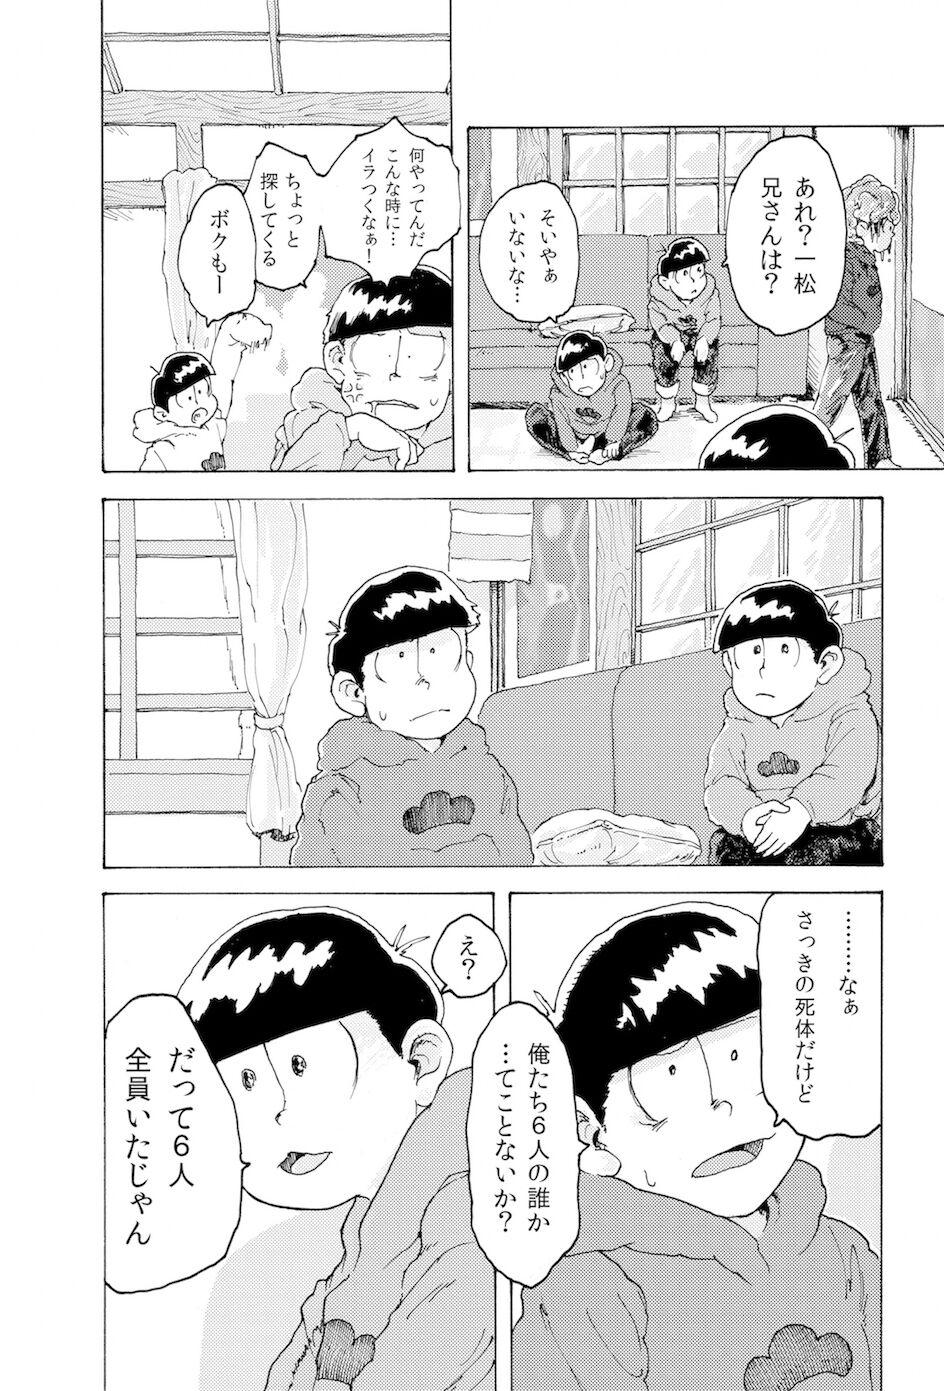 Puba [Koshigerunasunibusu] WEB Sairoku [R18G] 'AIN'T SIX IS DEATH' - Osomatsu san Tit - Page 11